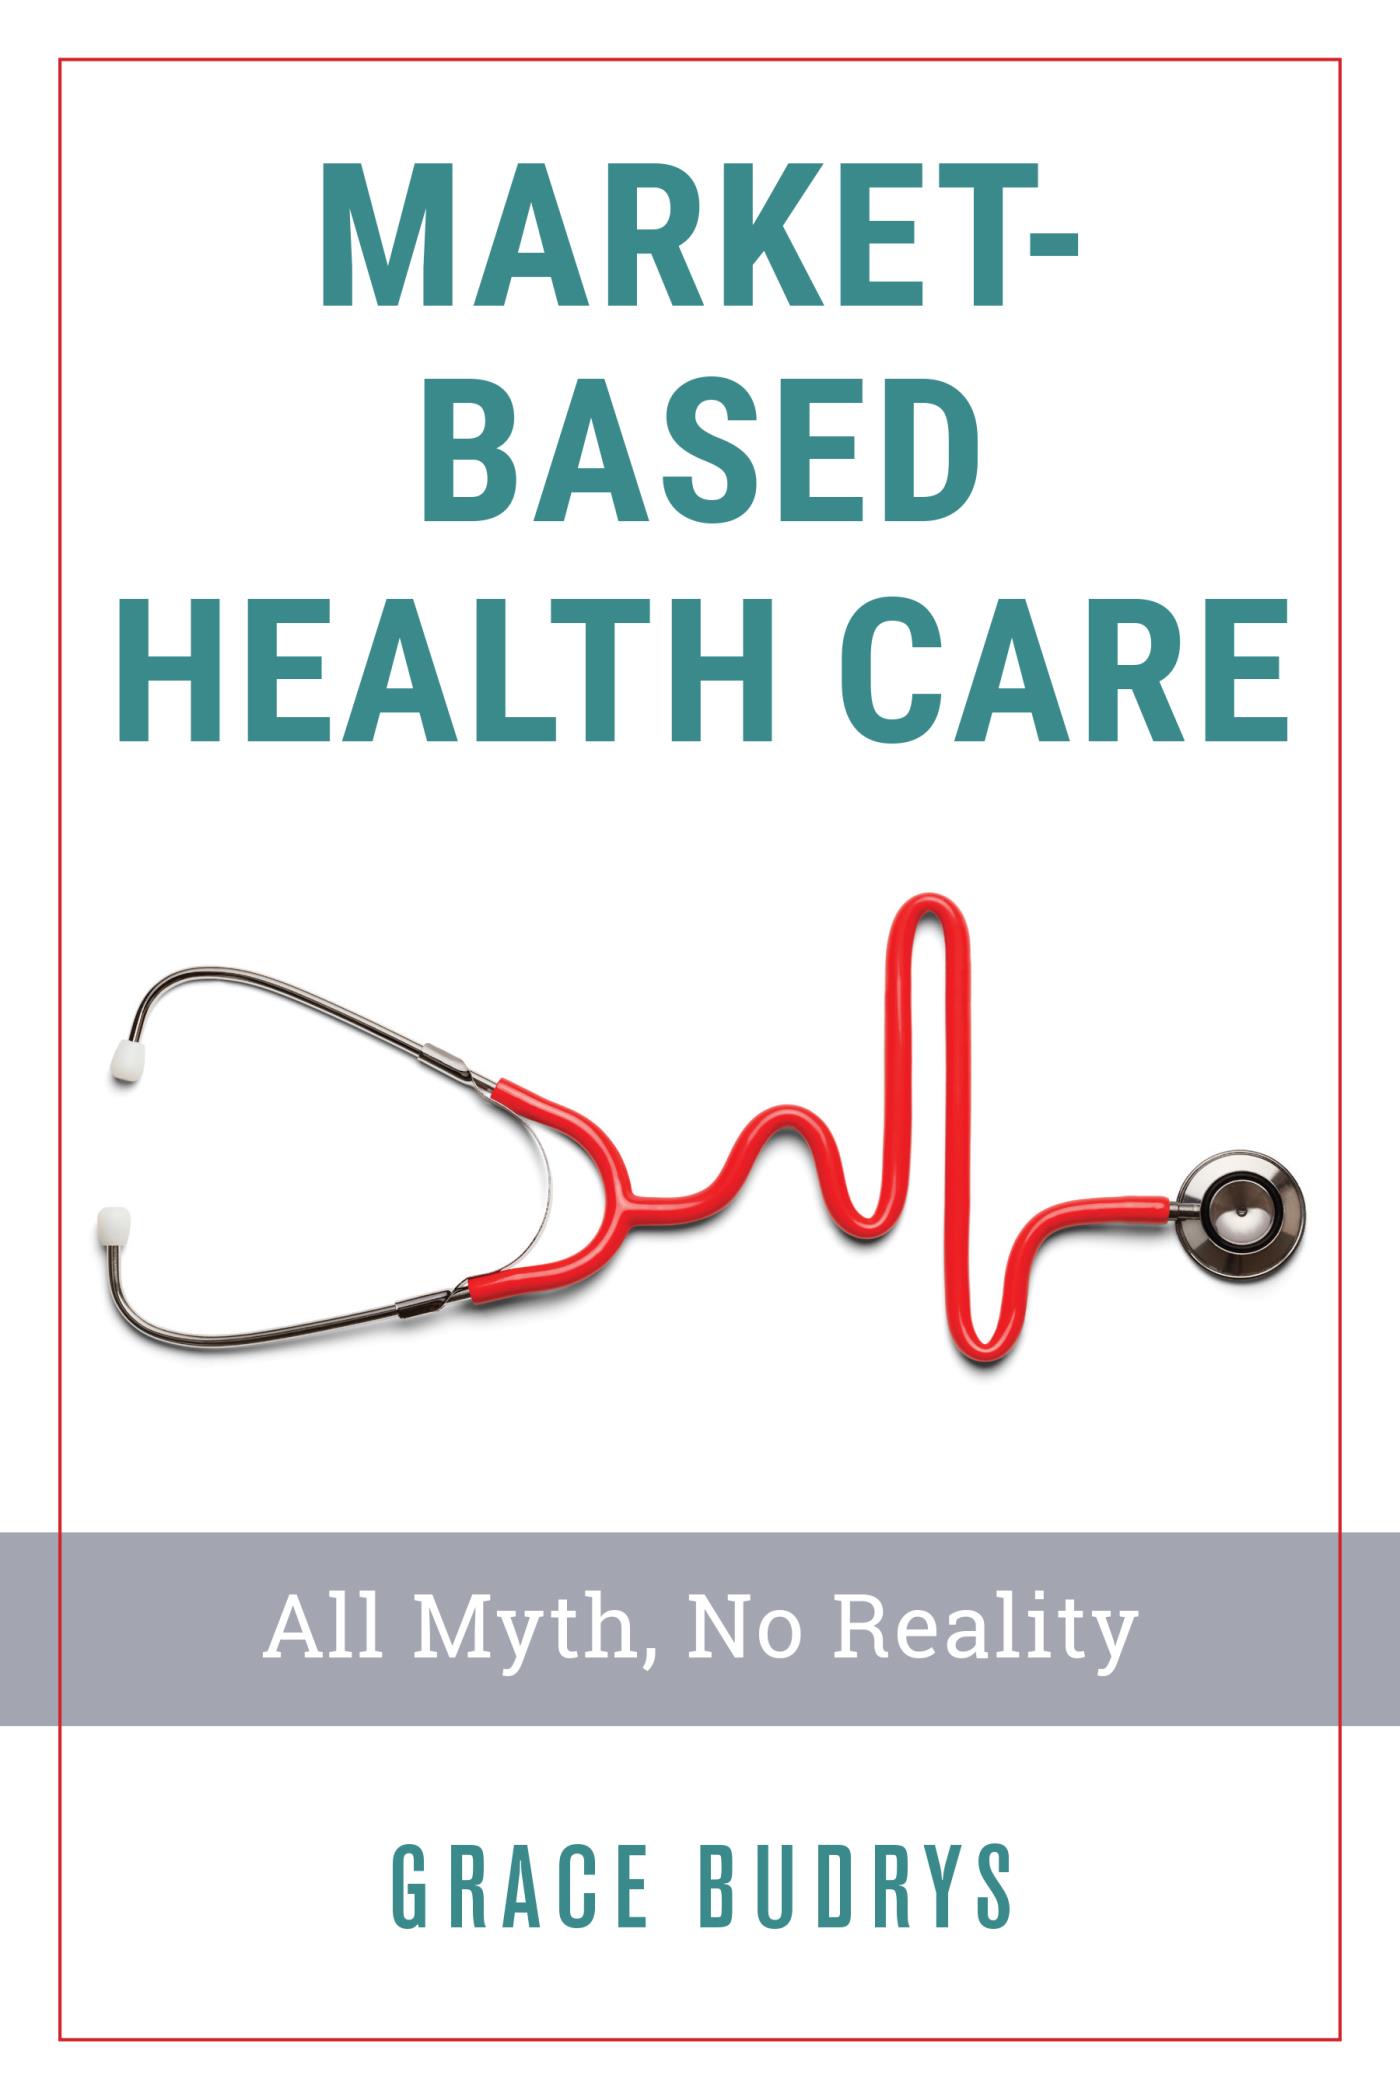 Market-Based Health Care